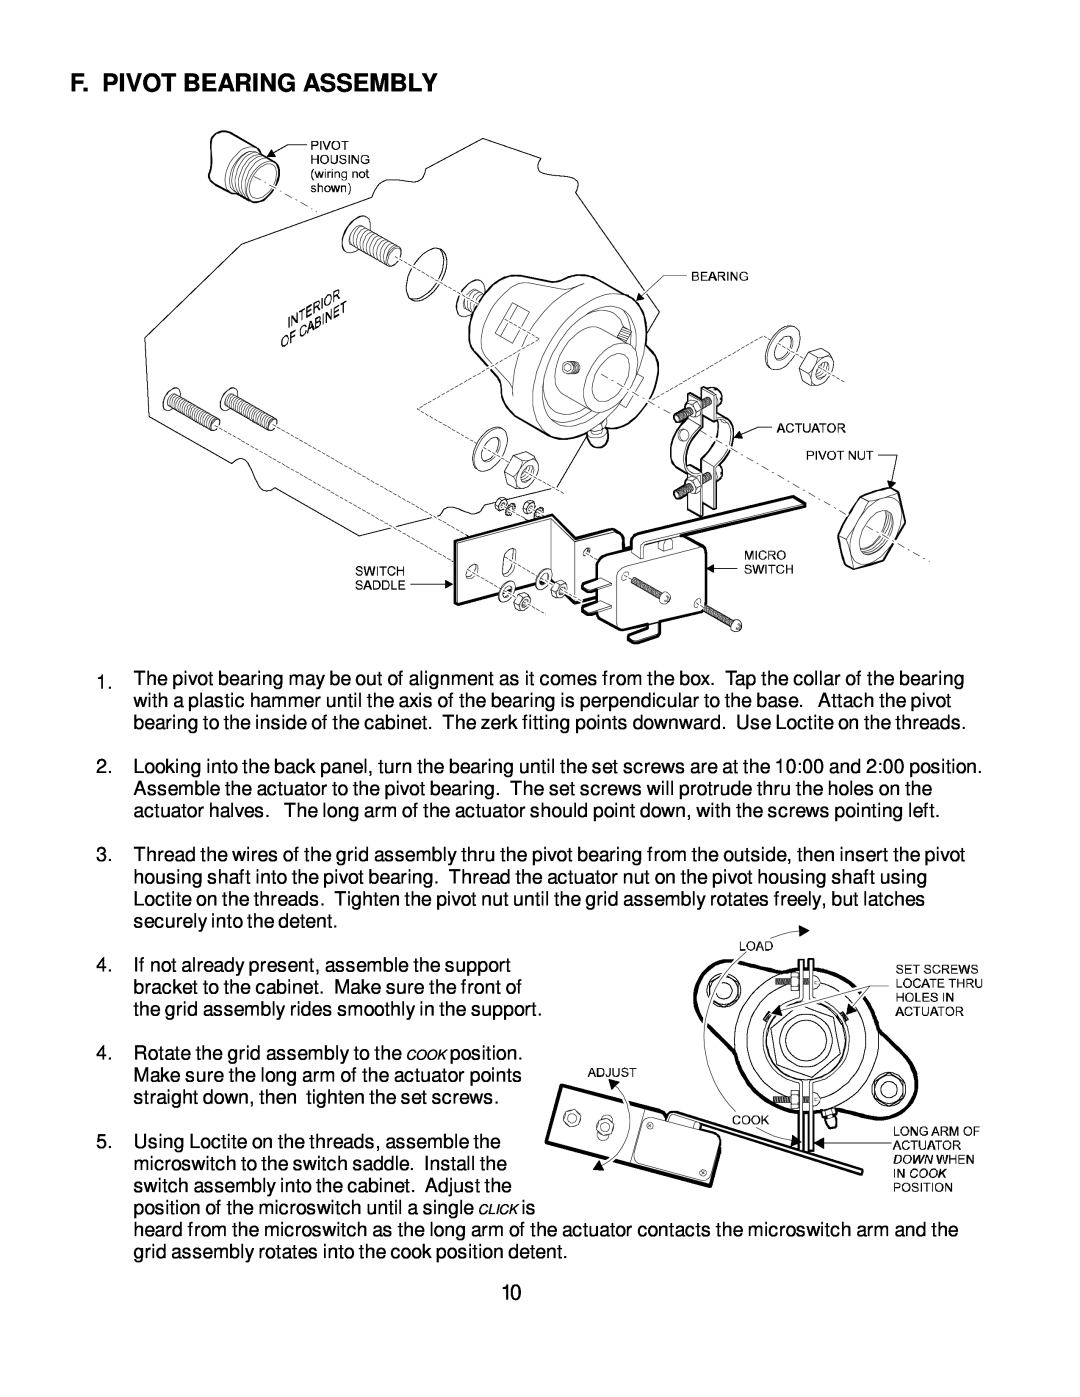 Wells BWB-1S manual F. Pivot Bearing Assembly 